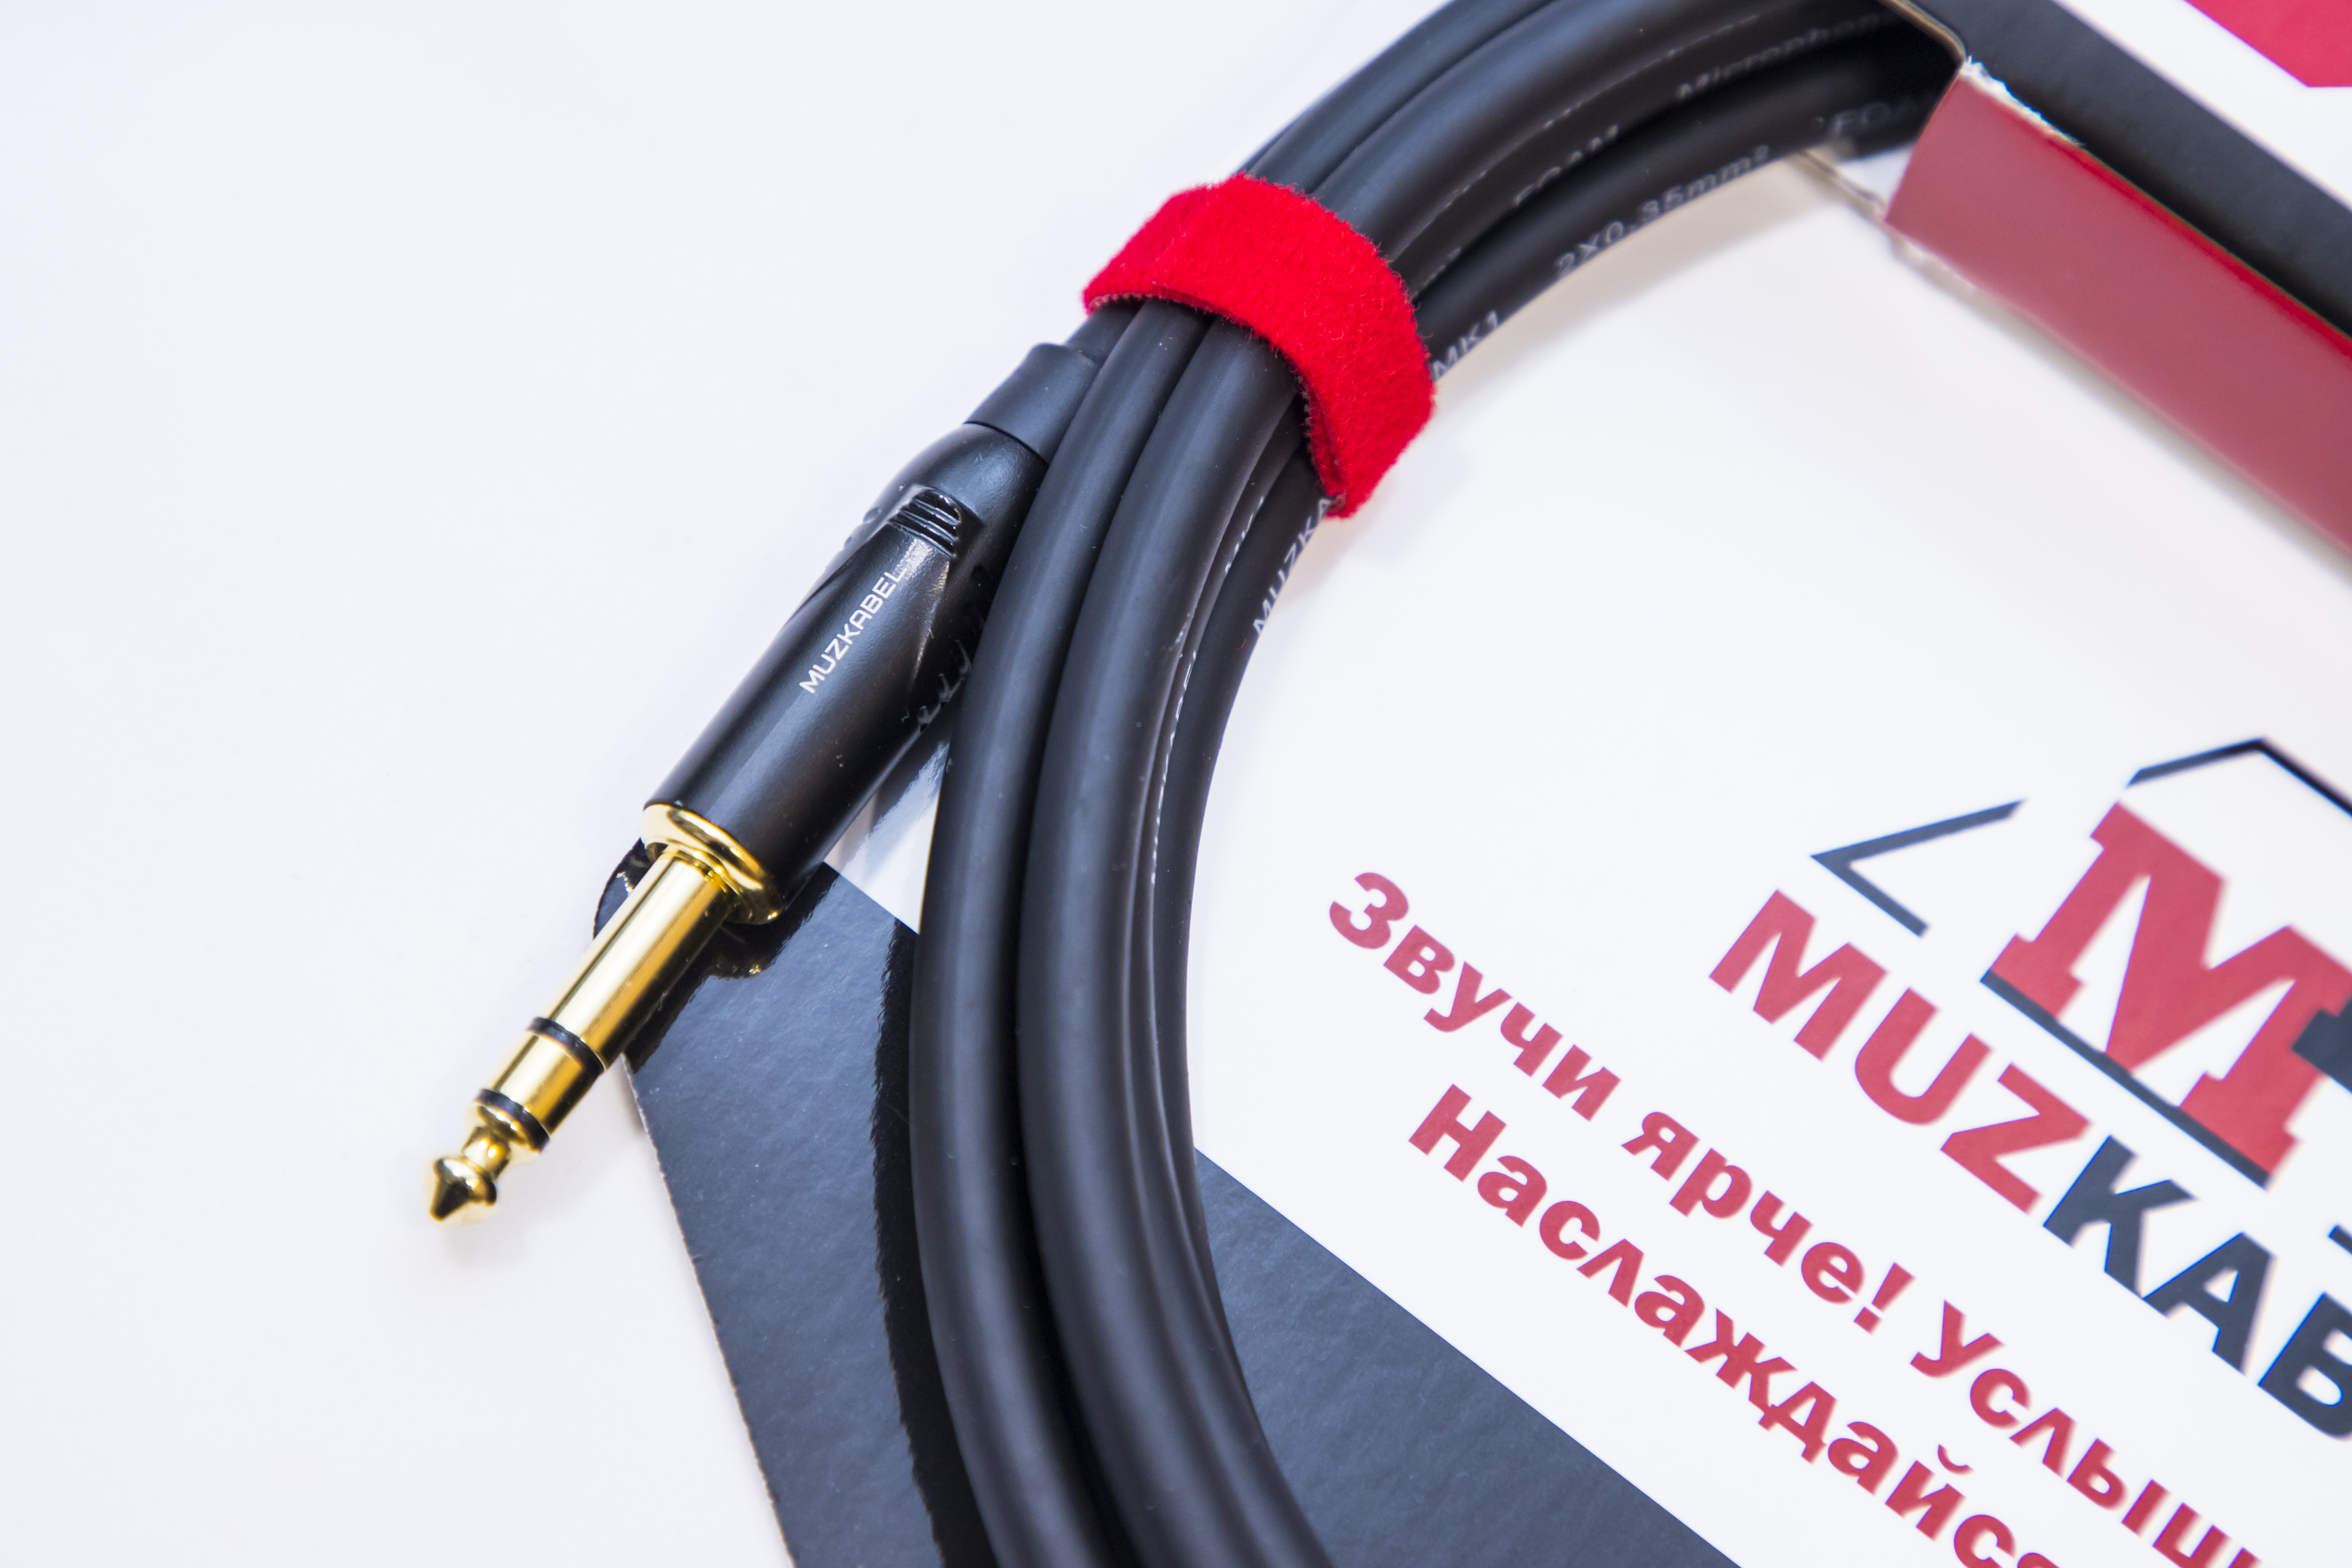 Аудио кабель MUZKABEL BXFMK1B - 1 метр, XLR (папа) - JACK (стерео)